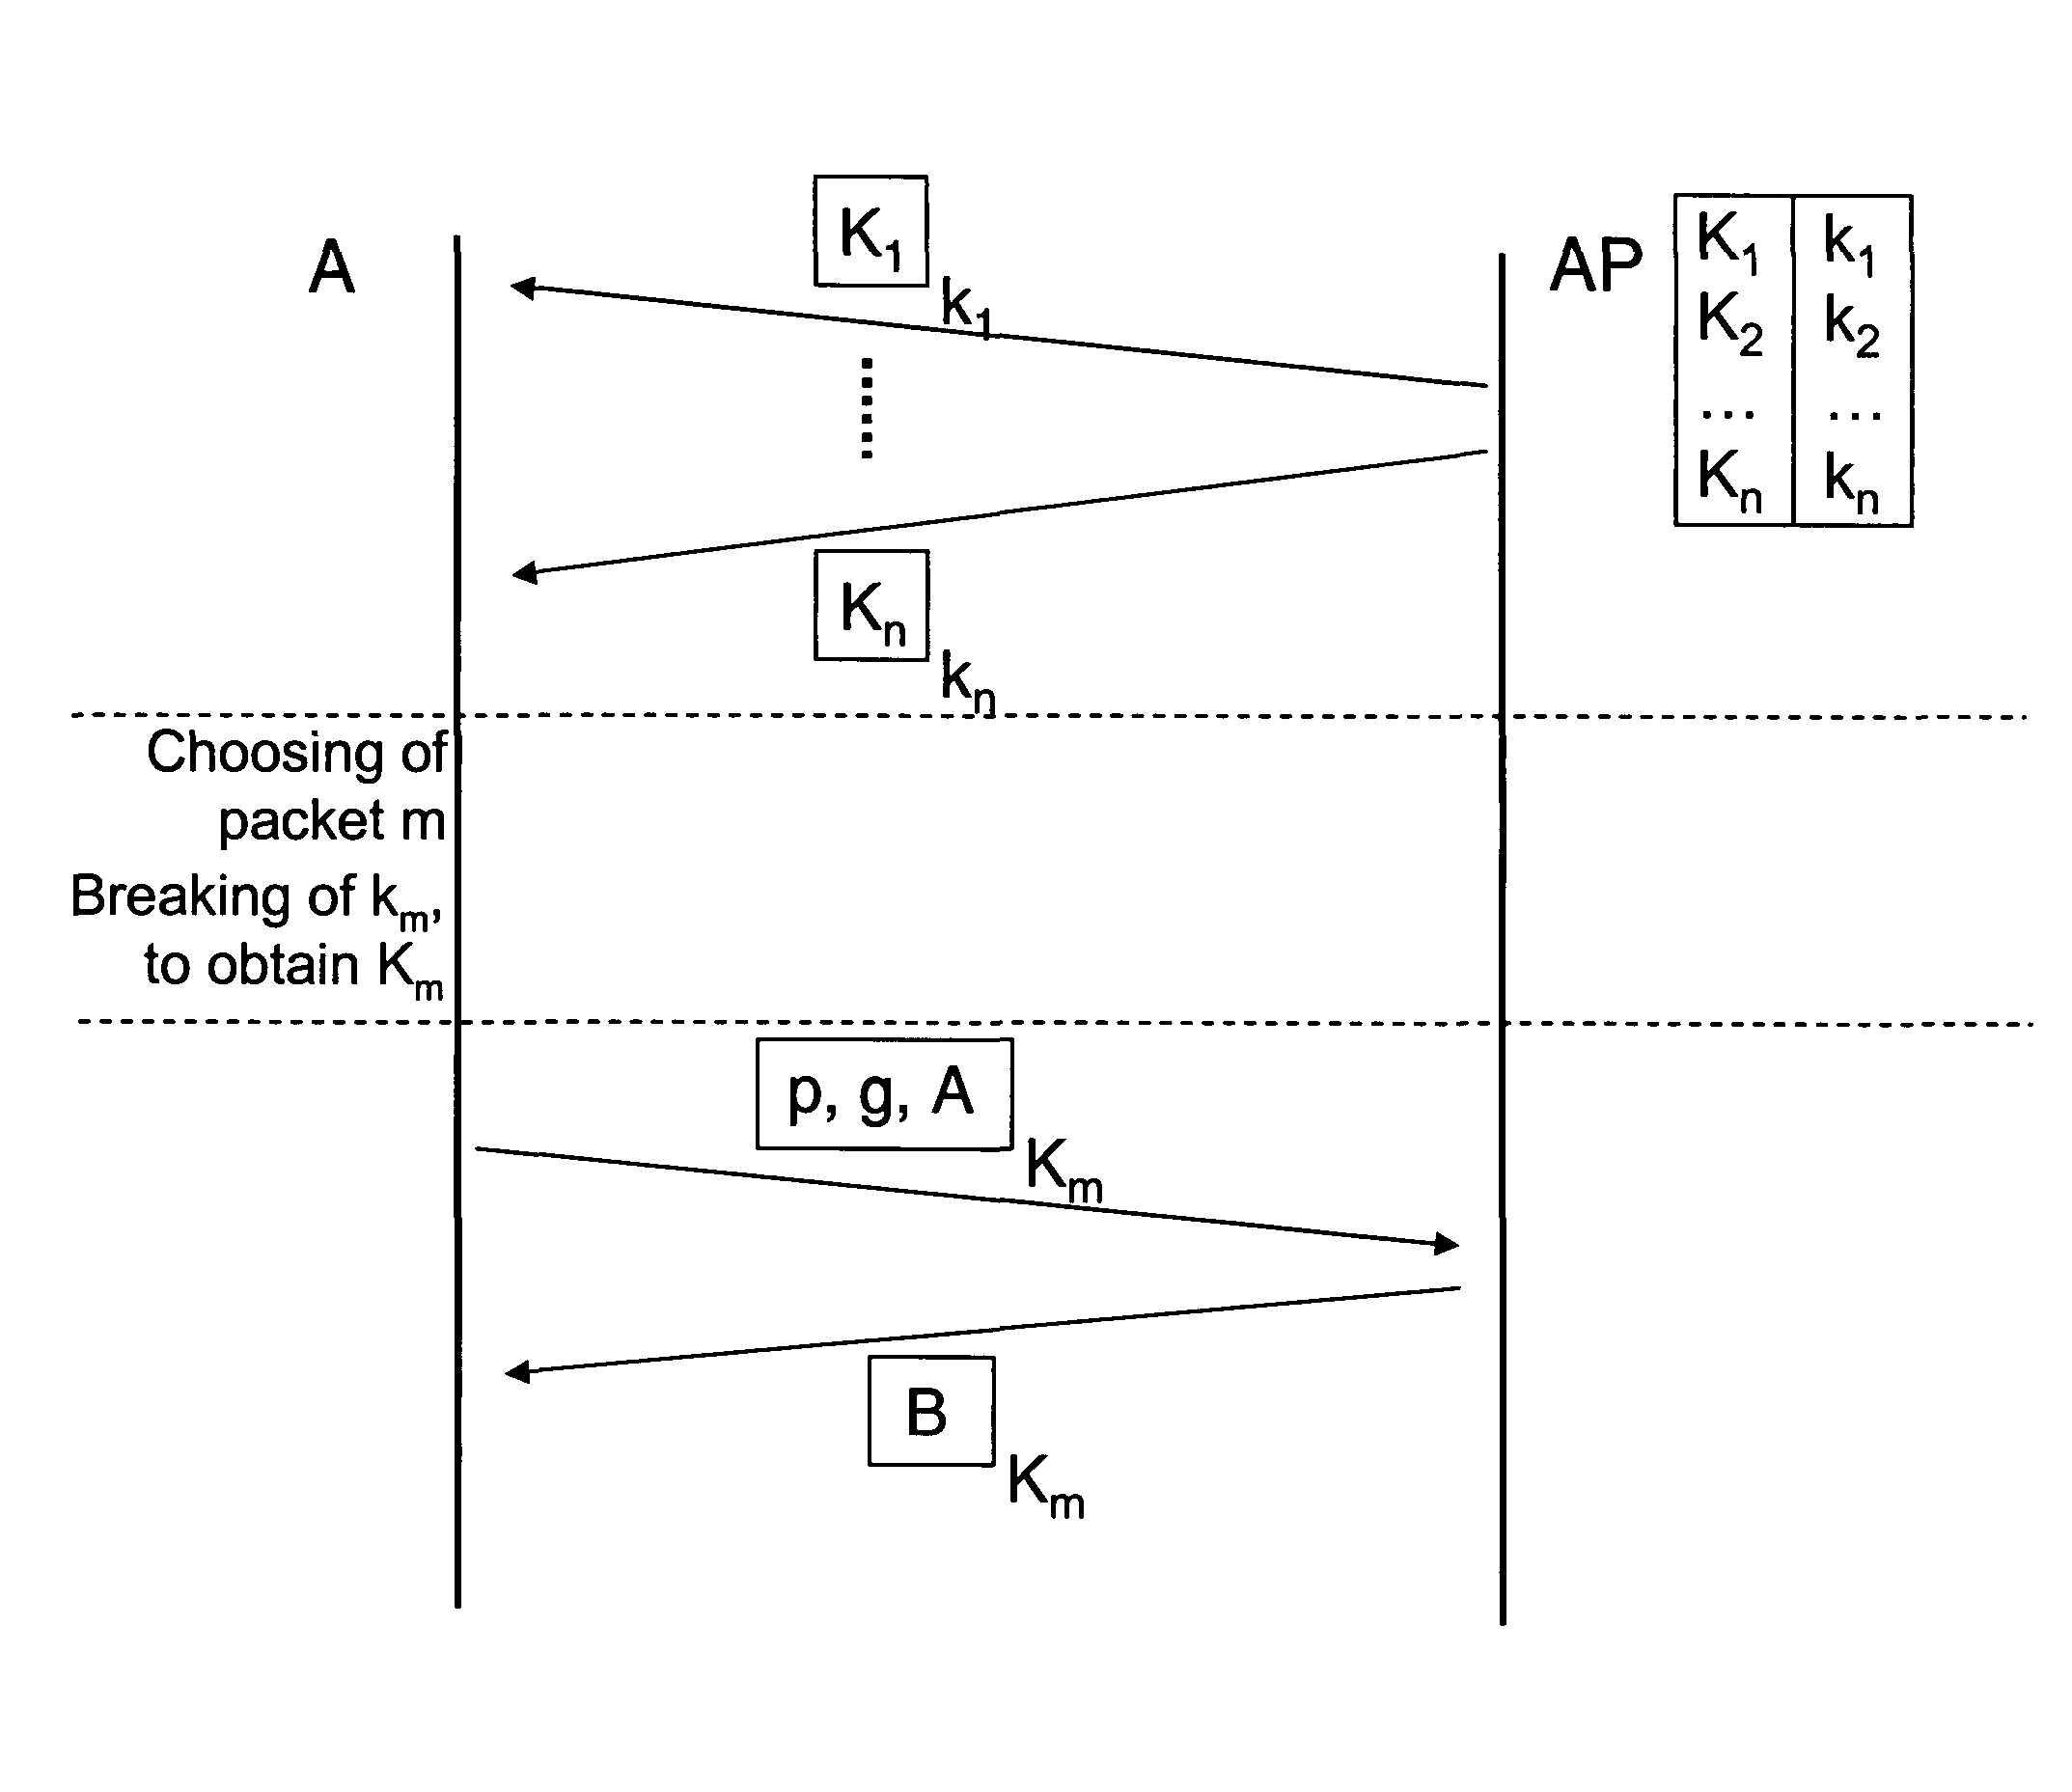 Method for establishing a secret key between two nodes in a communication network